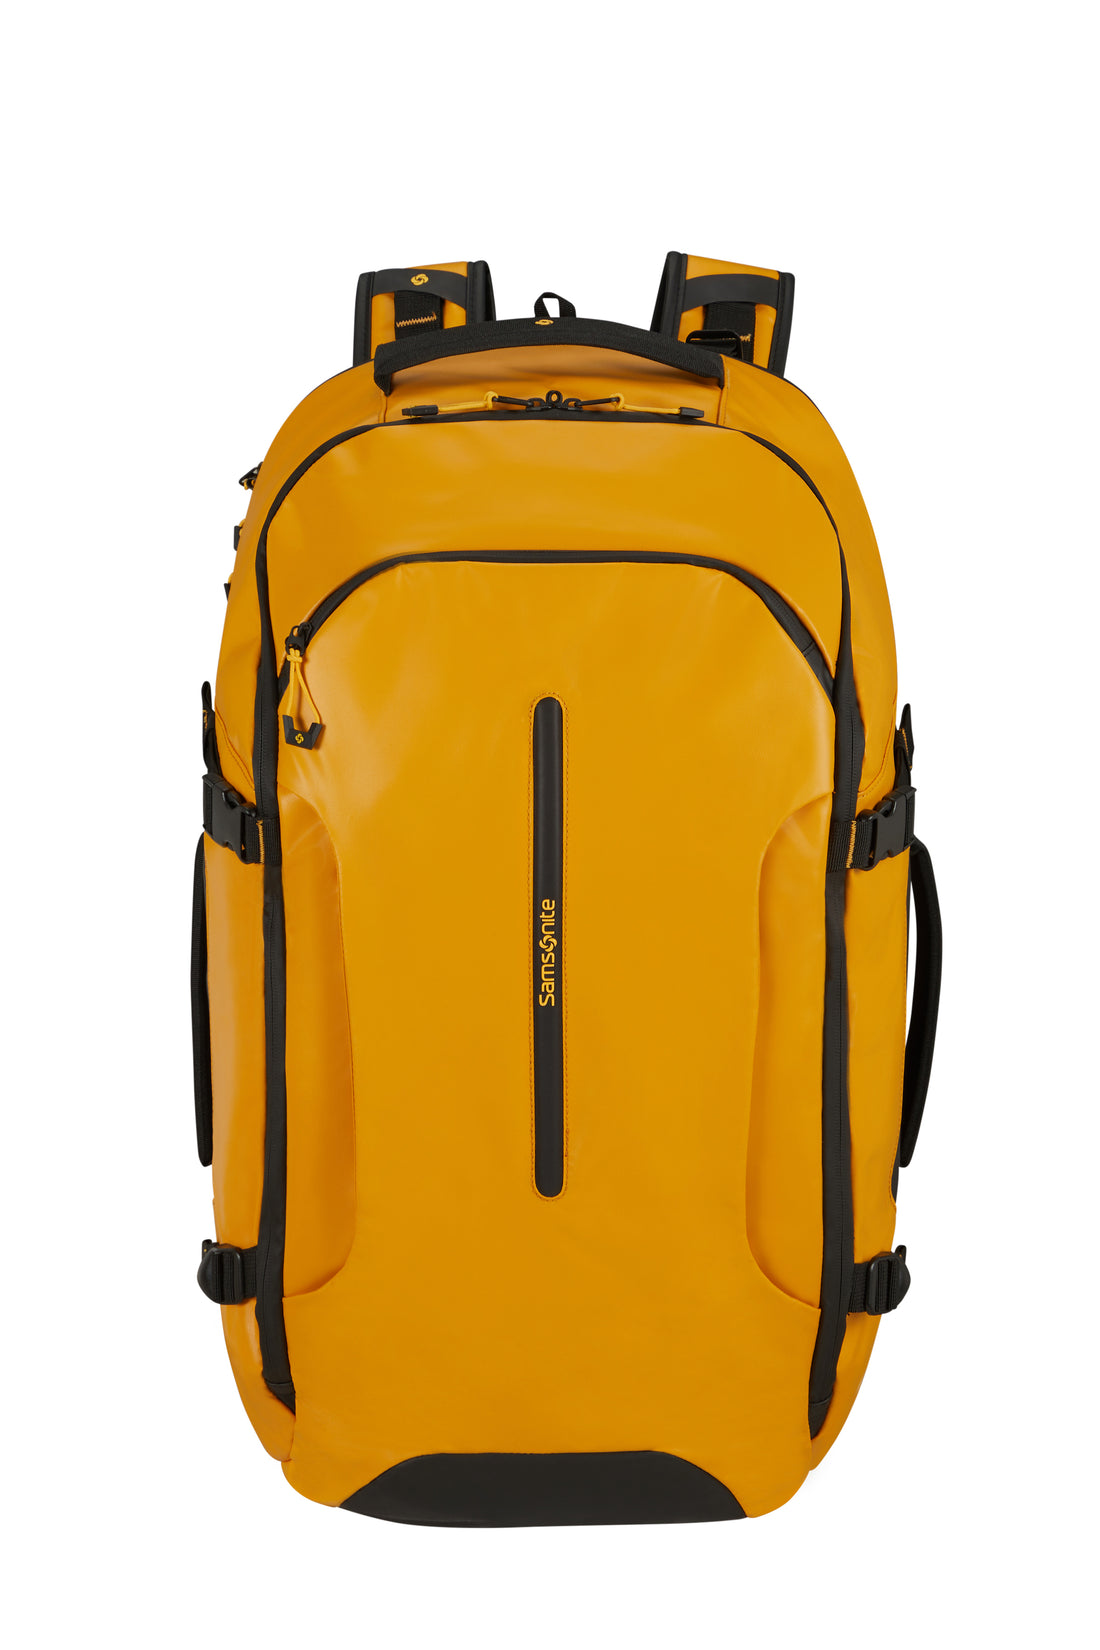 Samsonite Ecodiver Medium Travel Backpack